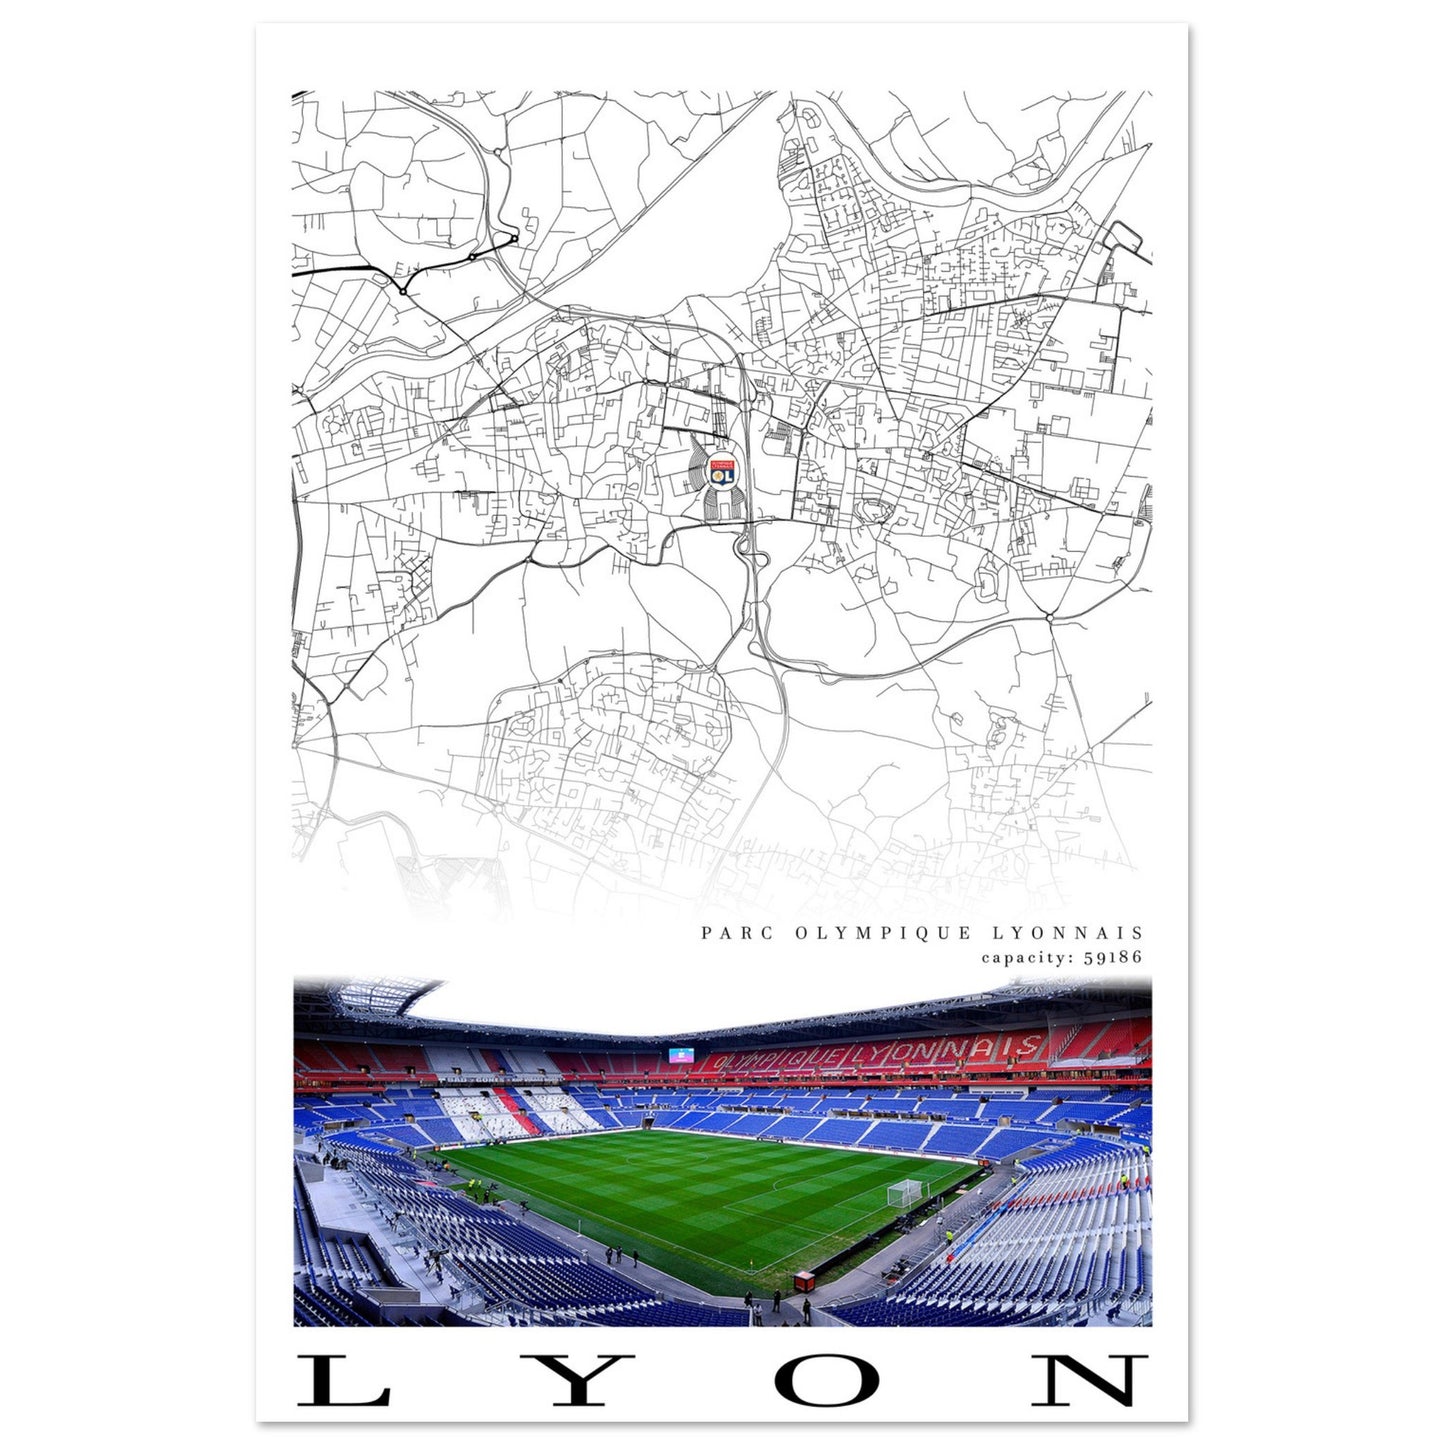 Map of Lyon - Parc Olympique Lyonnais